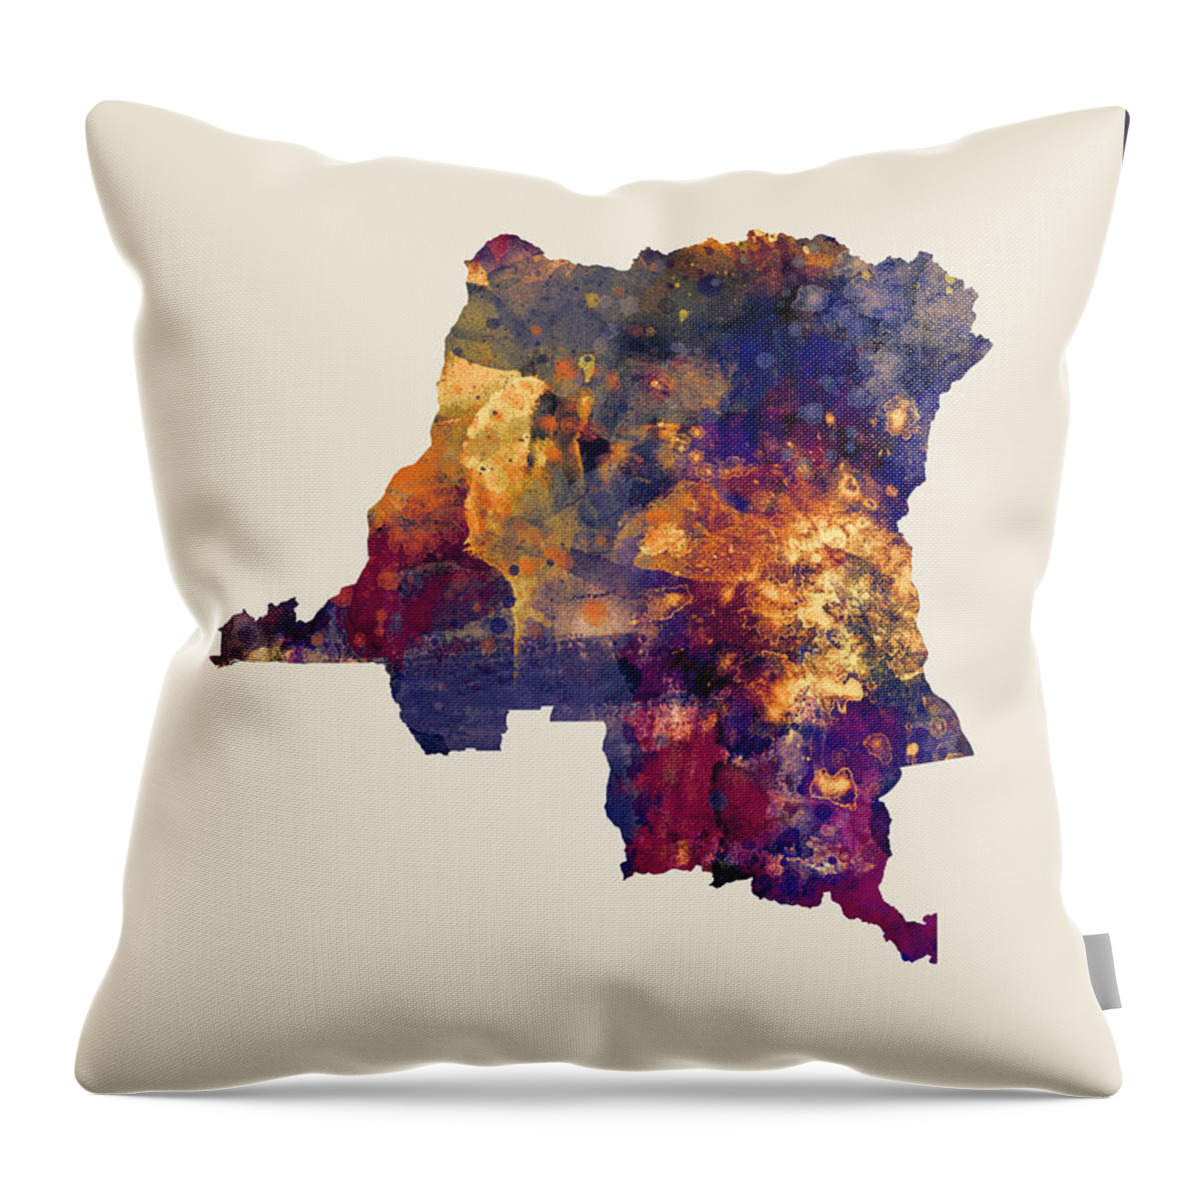 Democratic Republic Of The Congo Throw Pillow featuring the digital art Democratic Republic of the Congo Watercolor Map #1 by Michael Tompsett